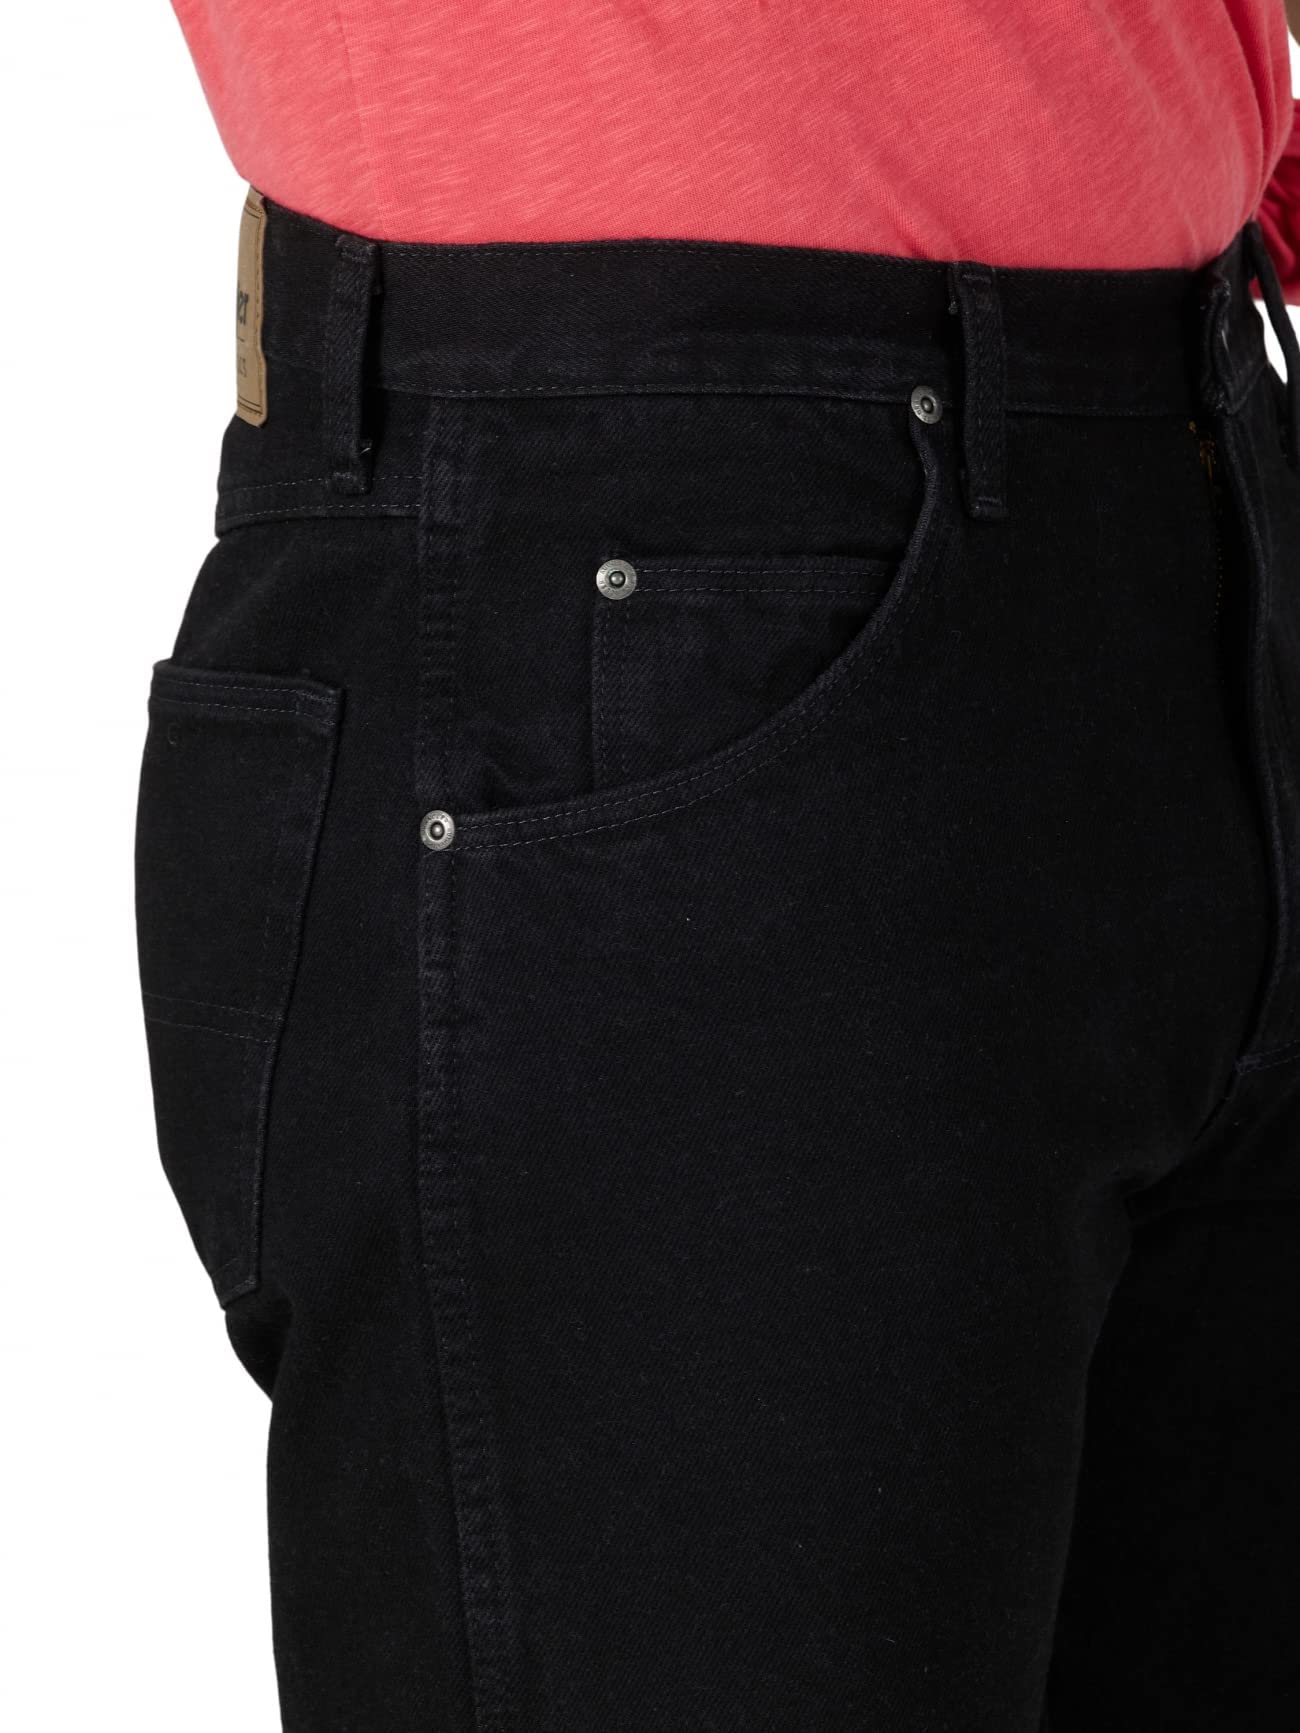 Wrangler Authentics Men's Classic 5-Pocket Regular Fit Cotton Jean, Black, 34W x 34L